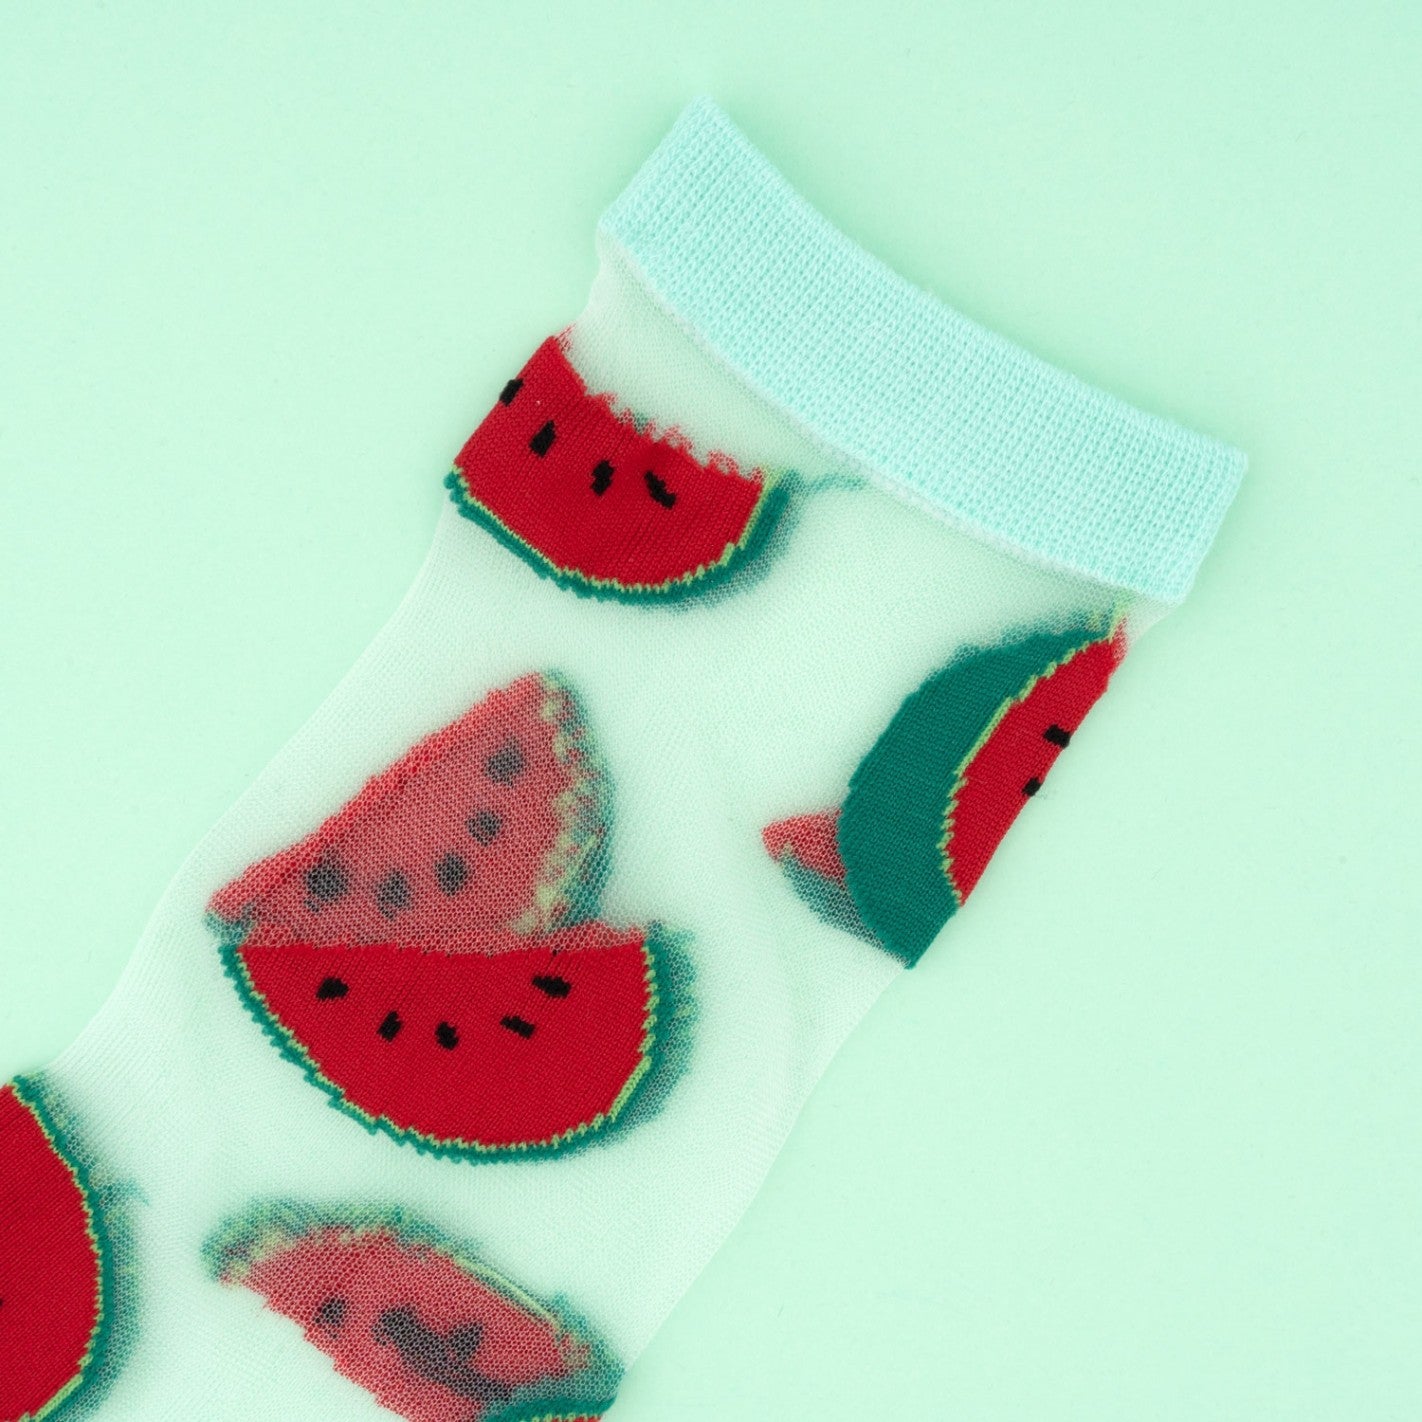 Watermelon Sheer Socks